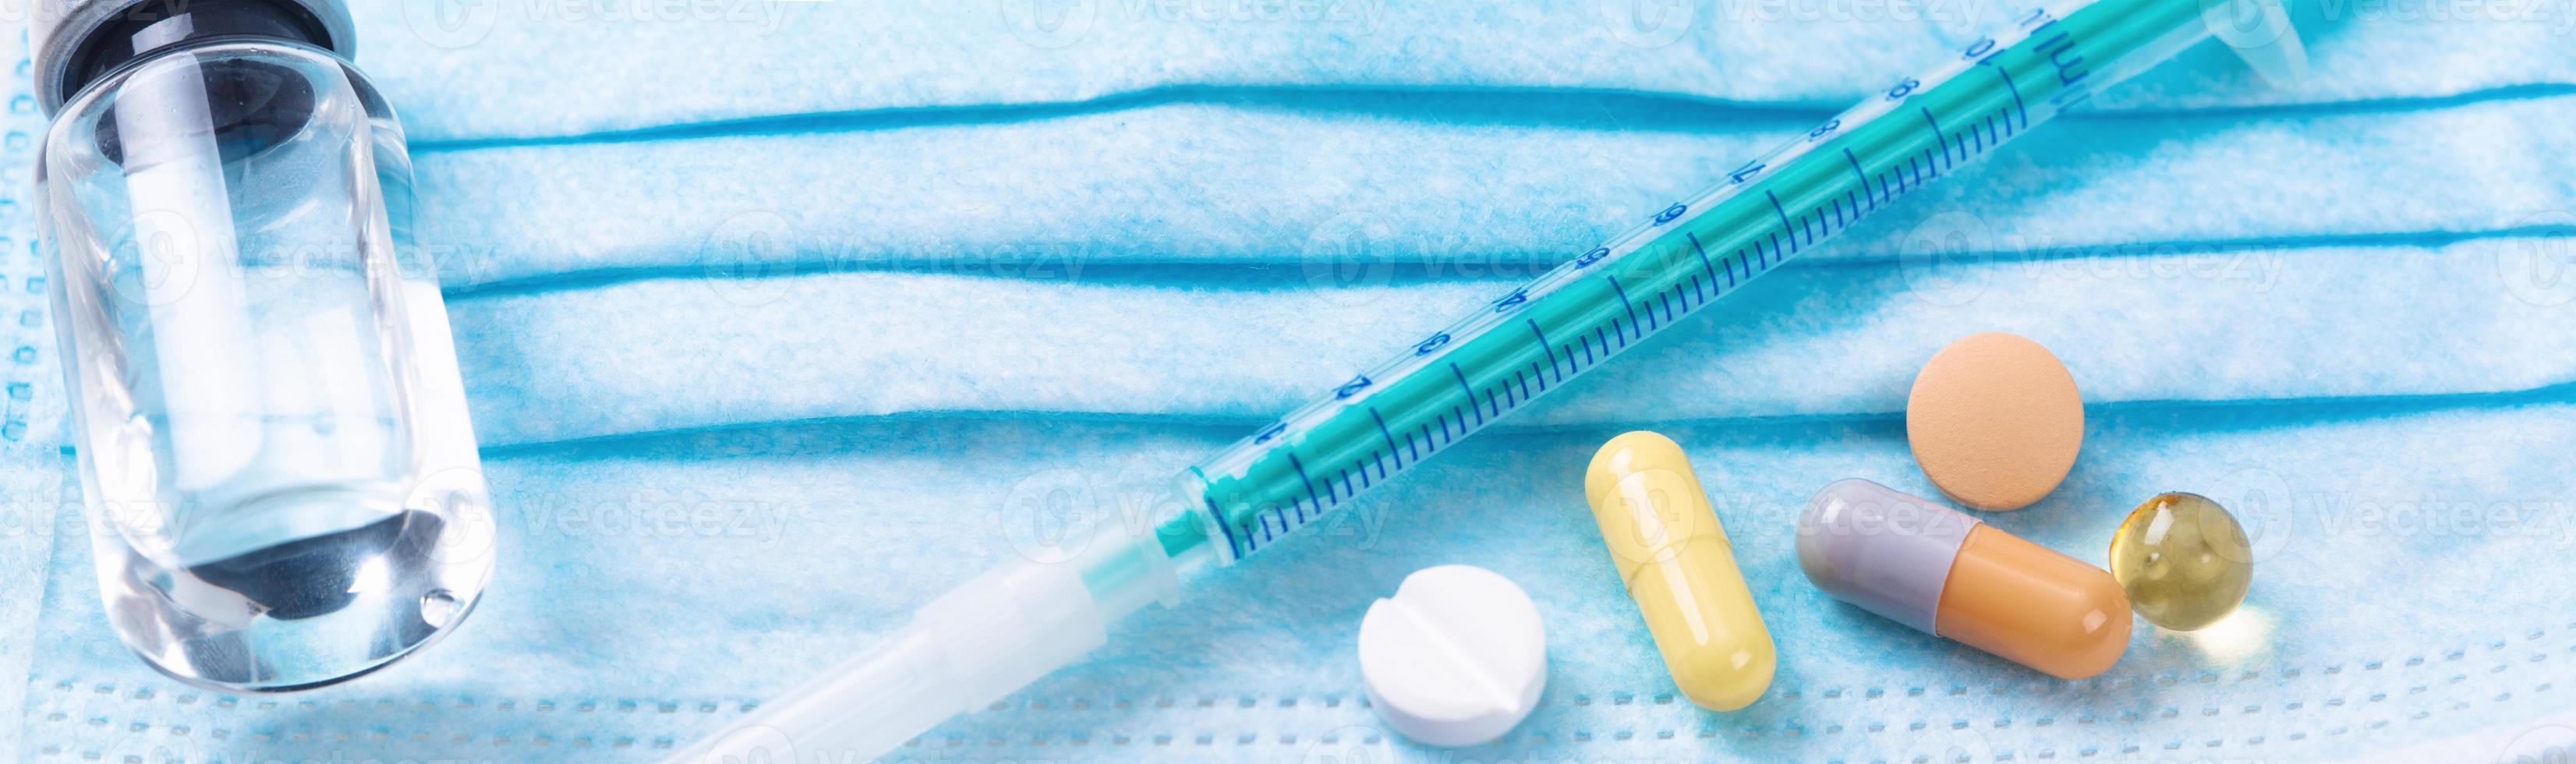 Medical syringe with a needle and pills. Corona virus vaccine. photo